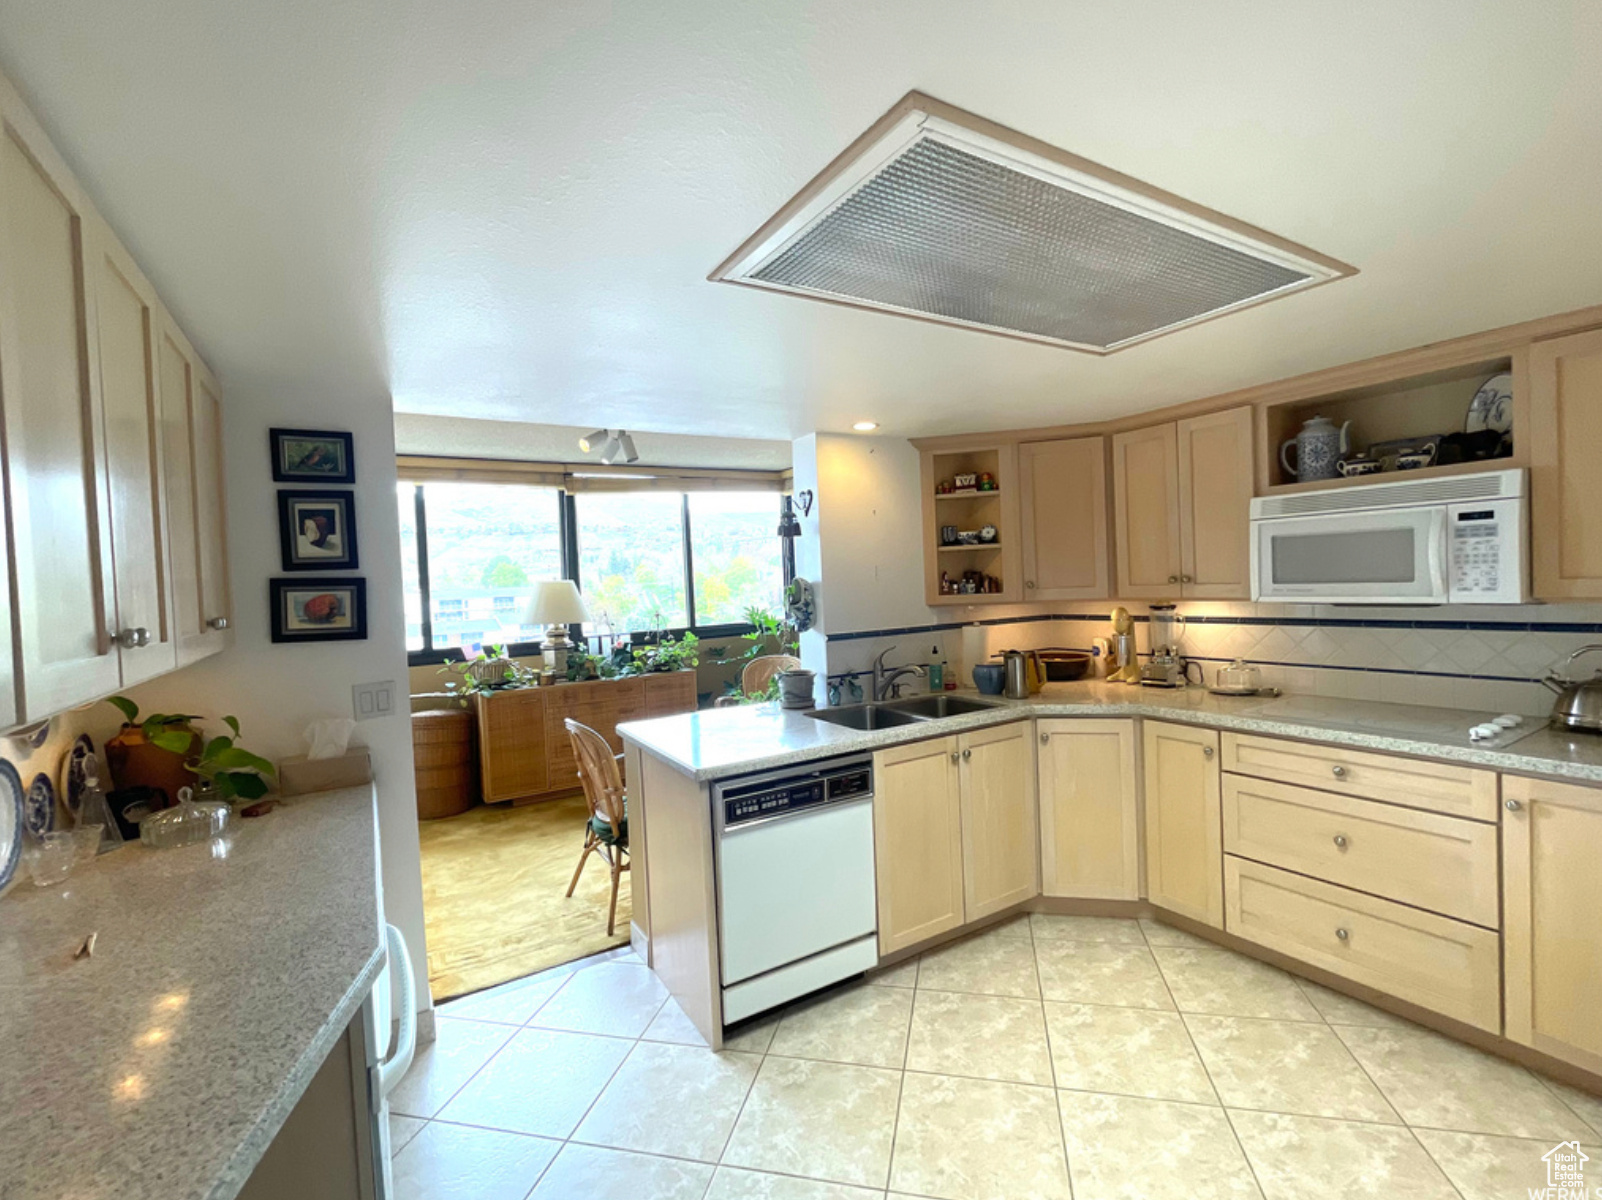 Kitchen featuring kitchen peninsula, backsplash, white appliances, light tile flooring, and sink